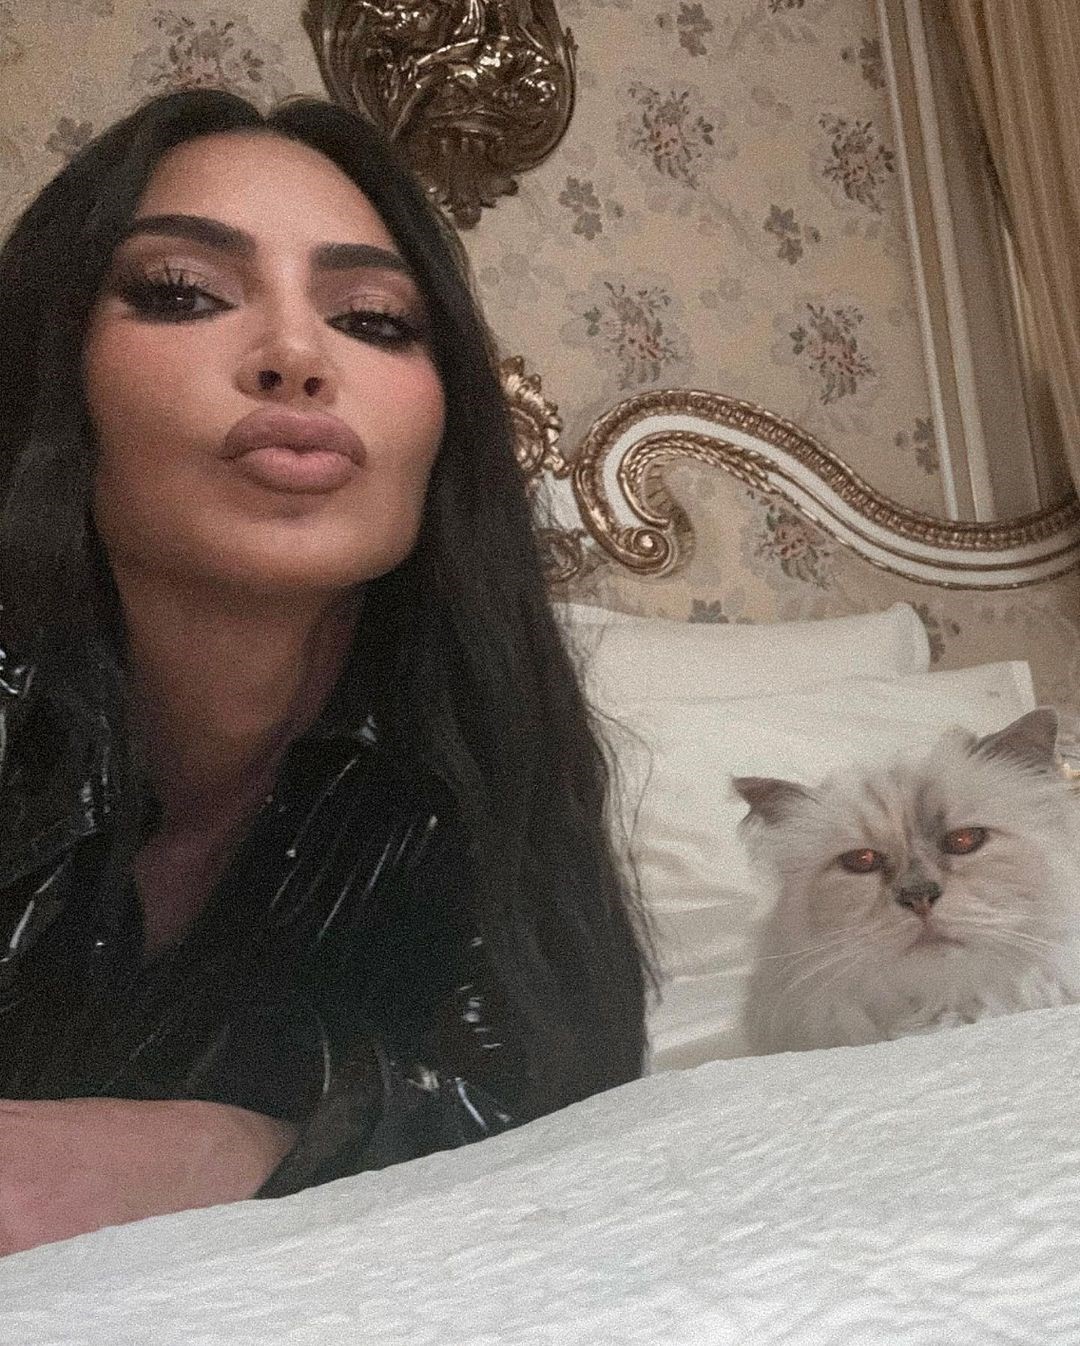 Ongewijzigd Manifestatie Mentaliteit Kim Kardashian clout-chases with Karl Lagerfeld's cat Choupette | Dazed